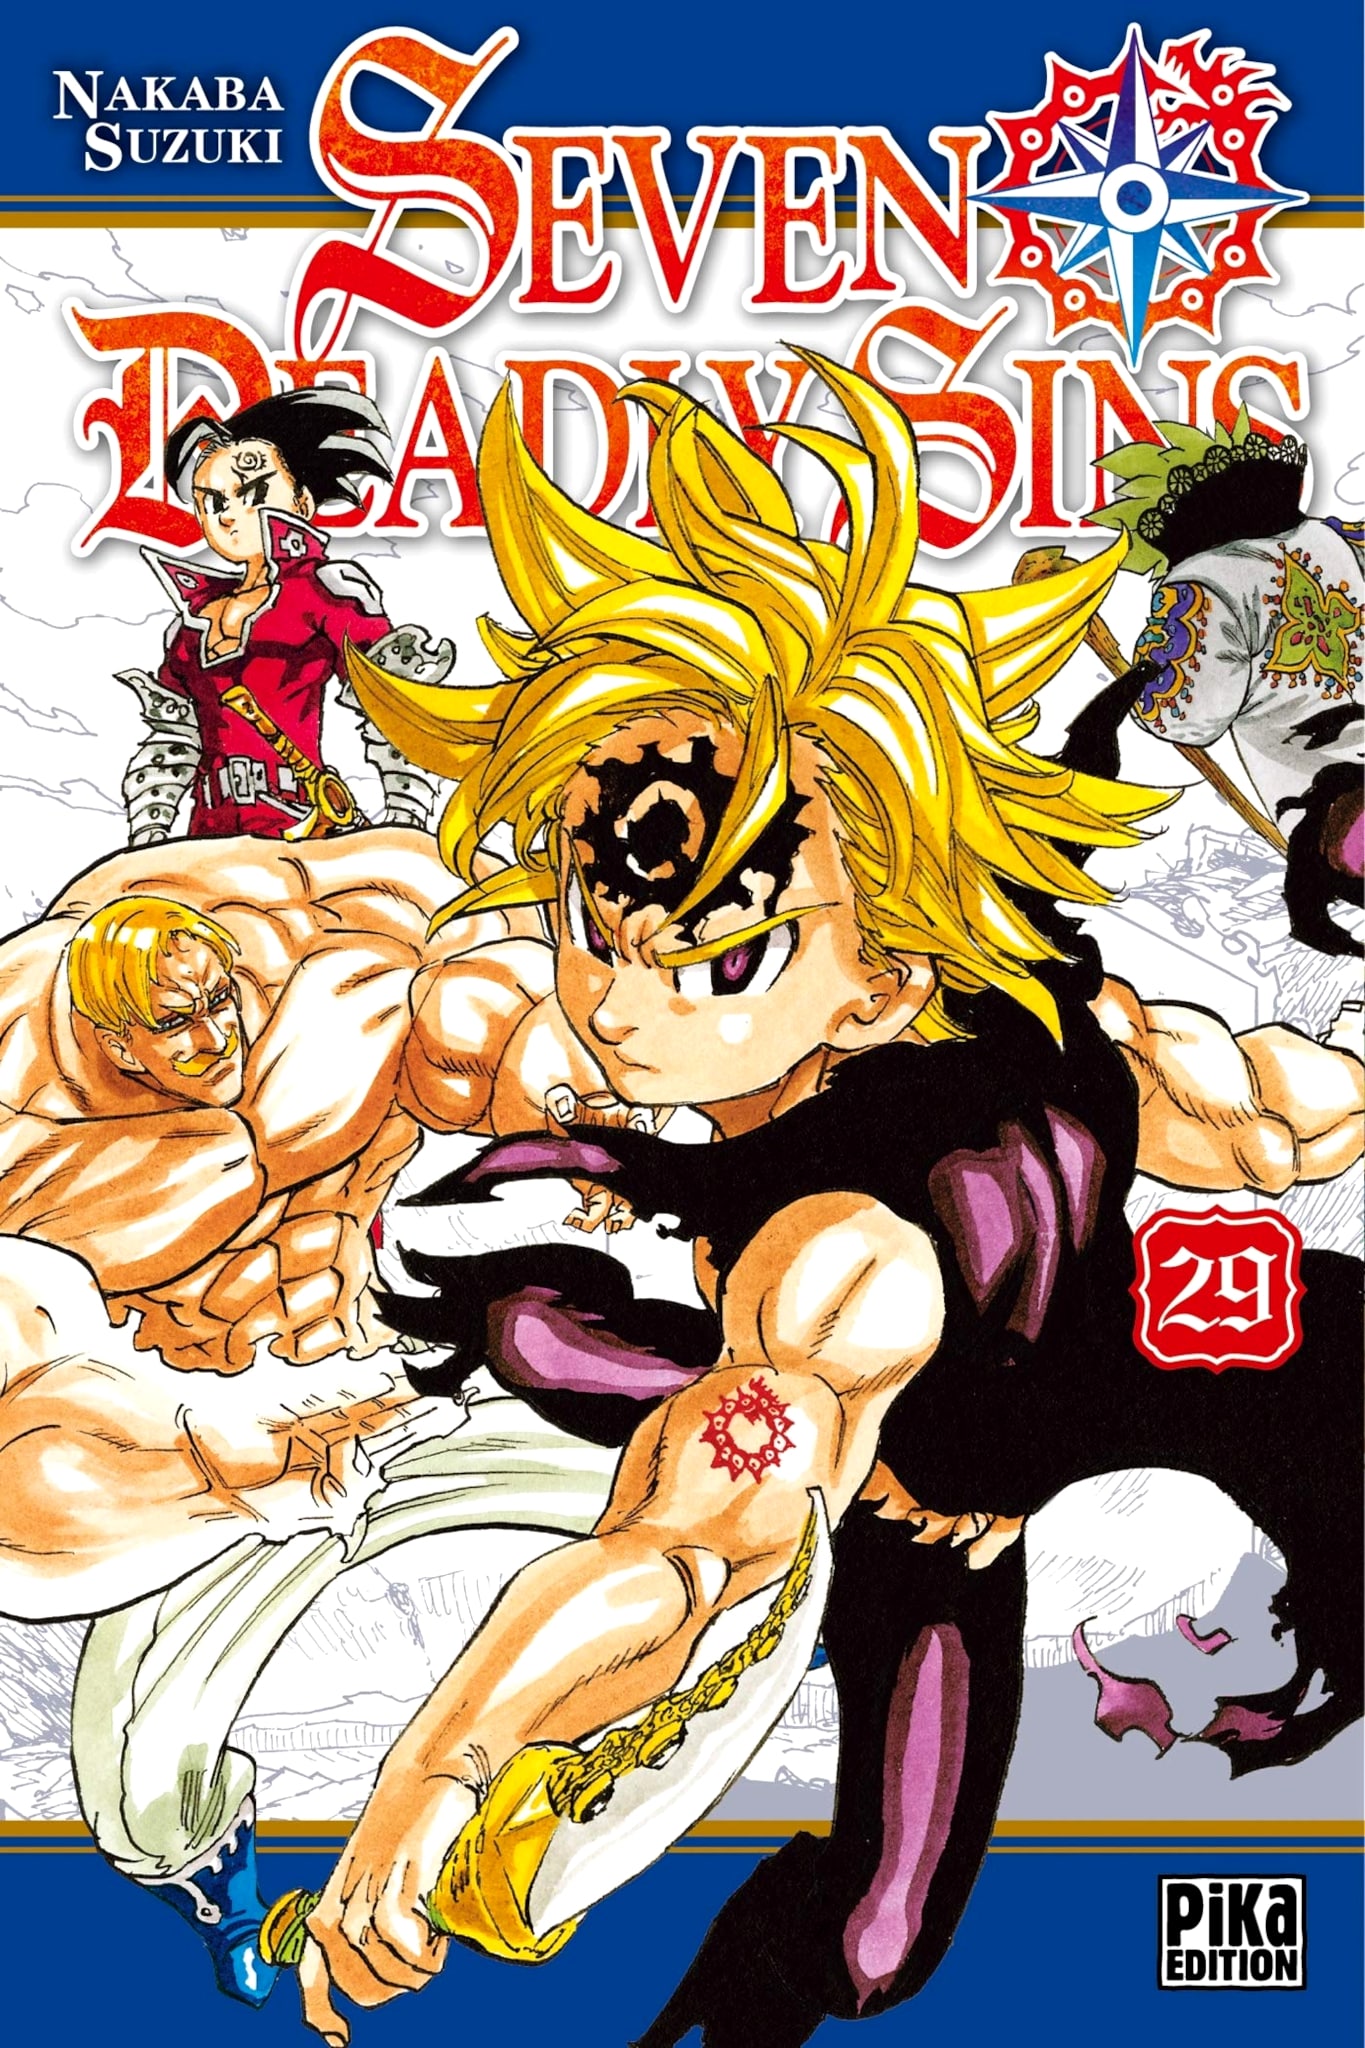 Tome 29 du manga The Seven Deadly Sins